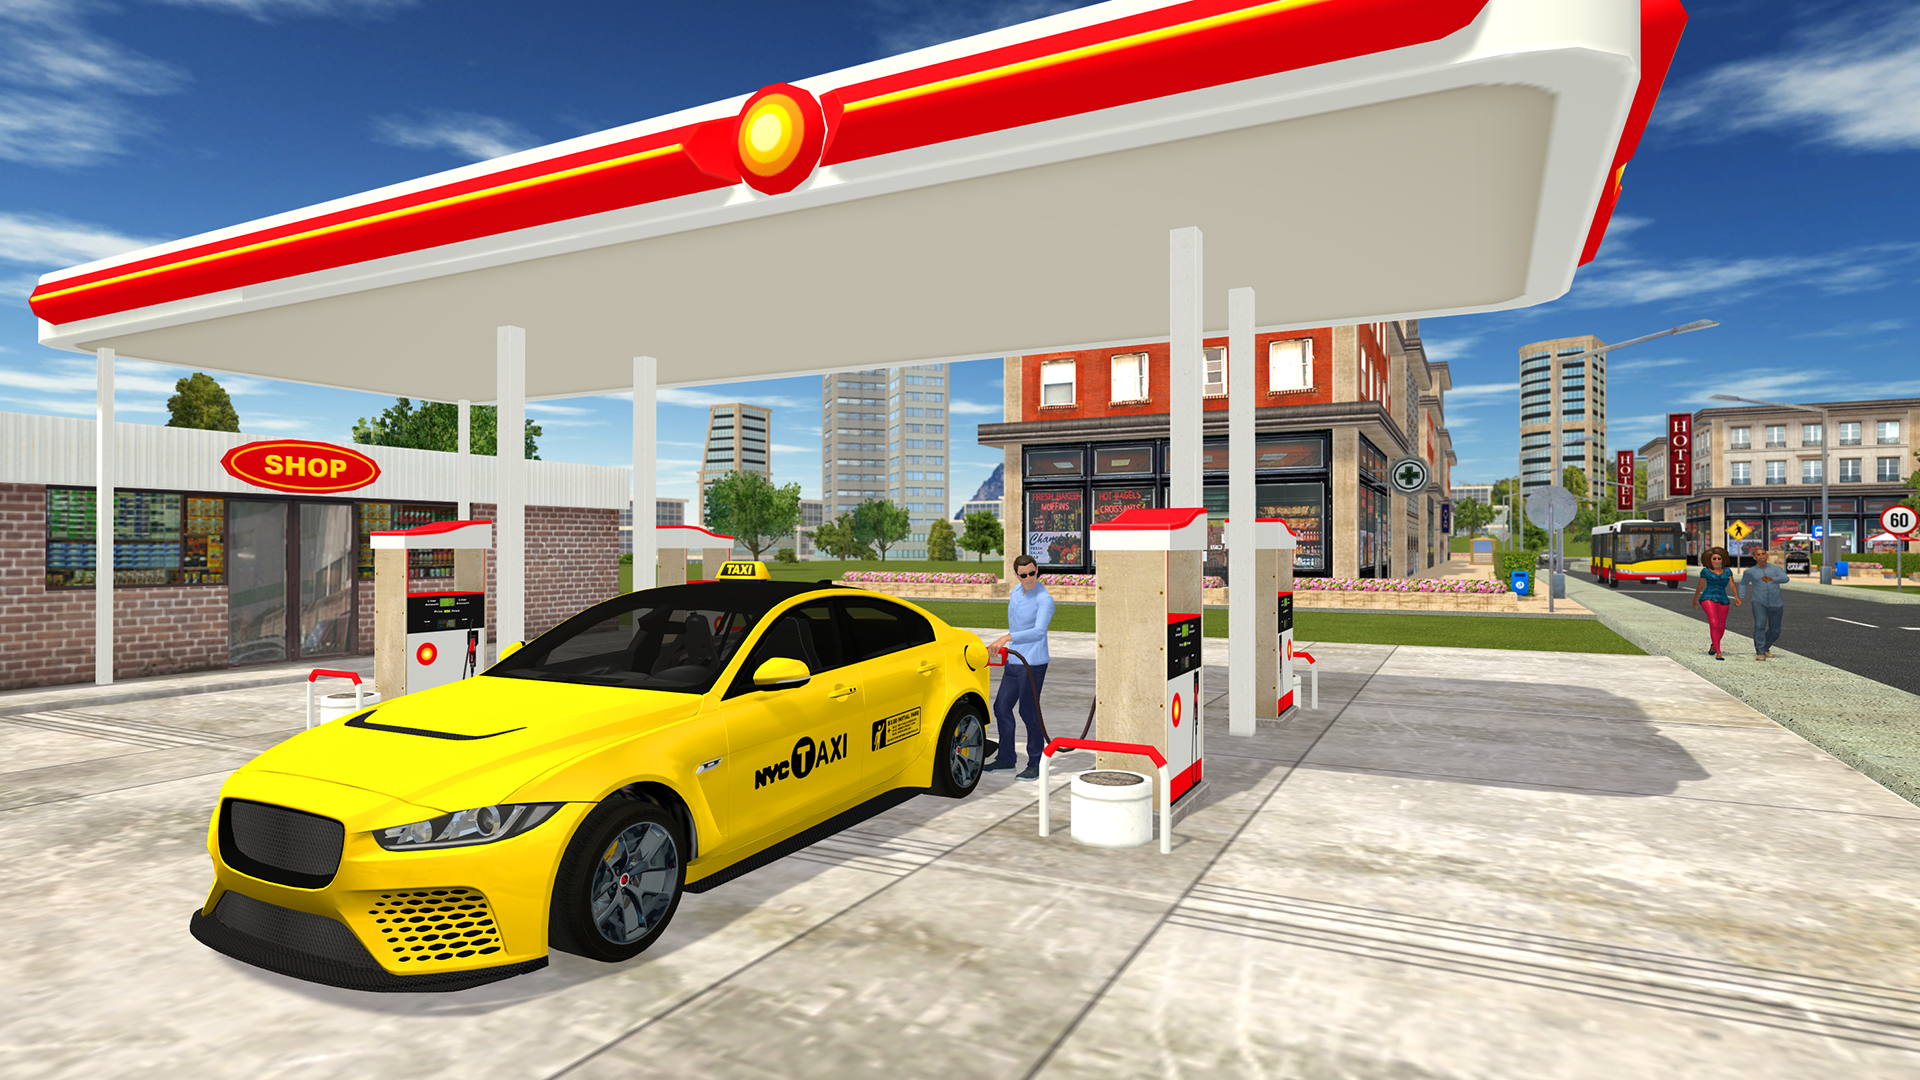 Screenshot 1 of Taxi Spiel 